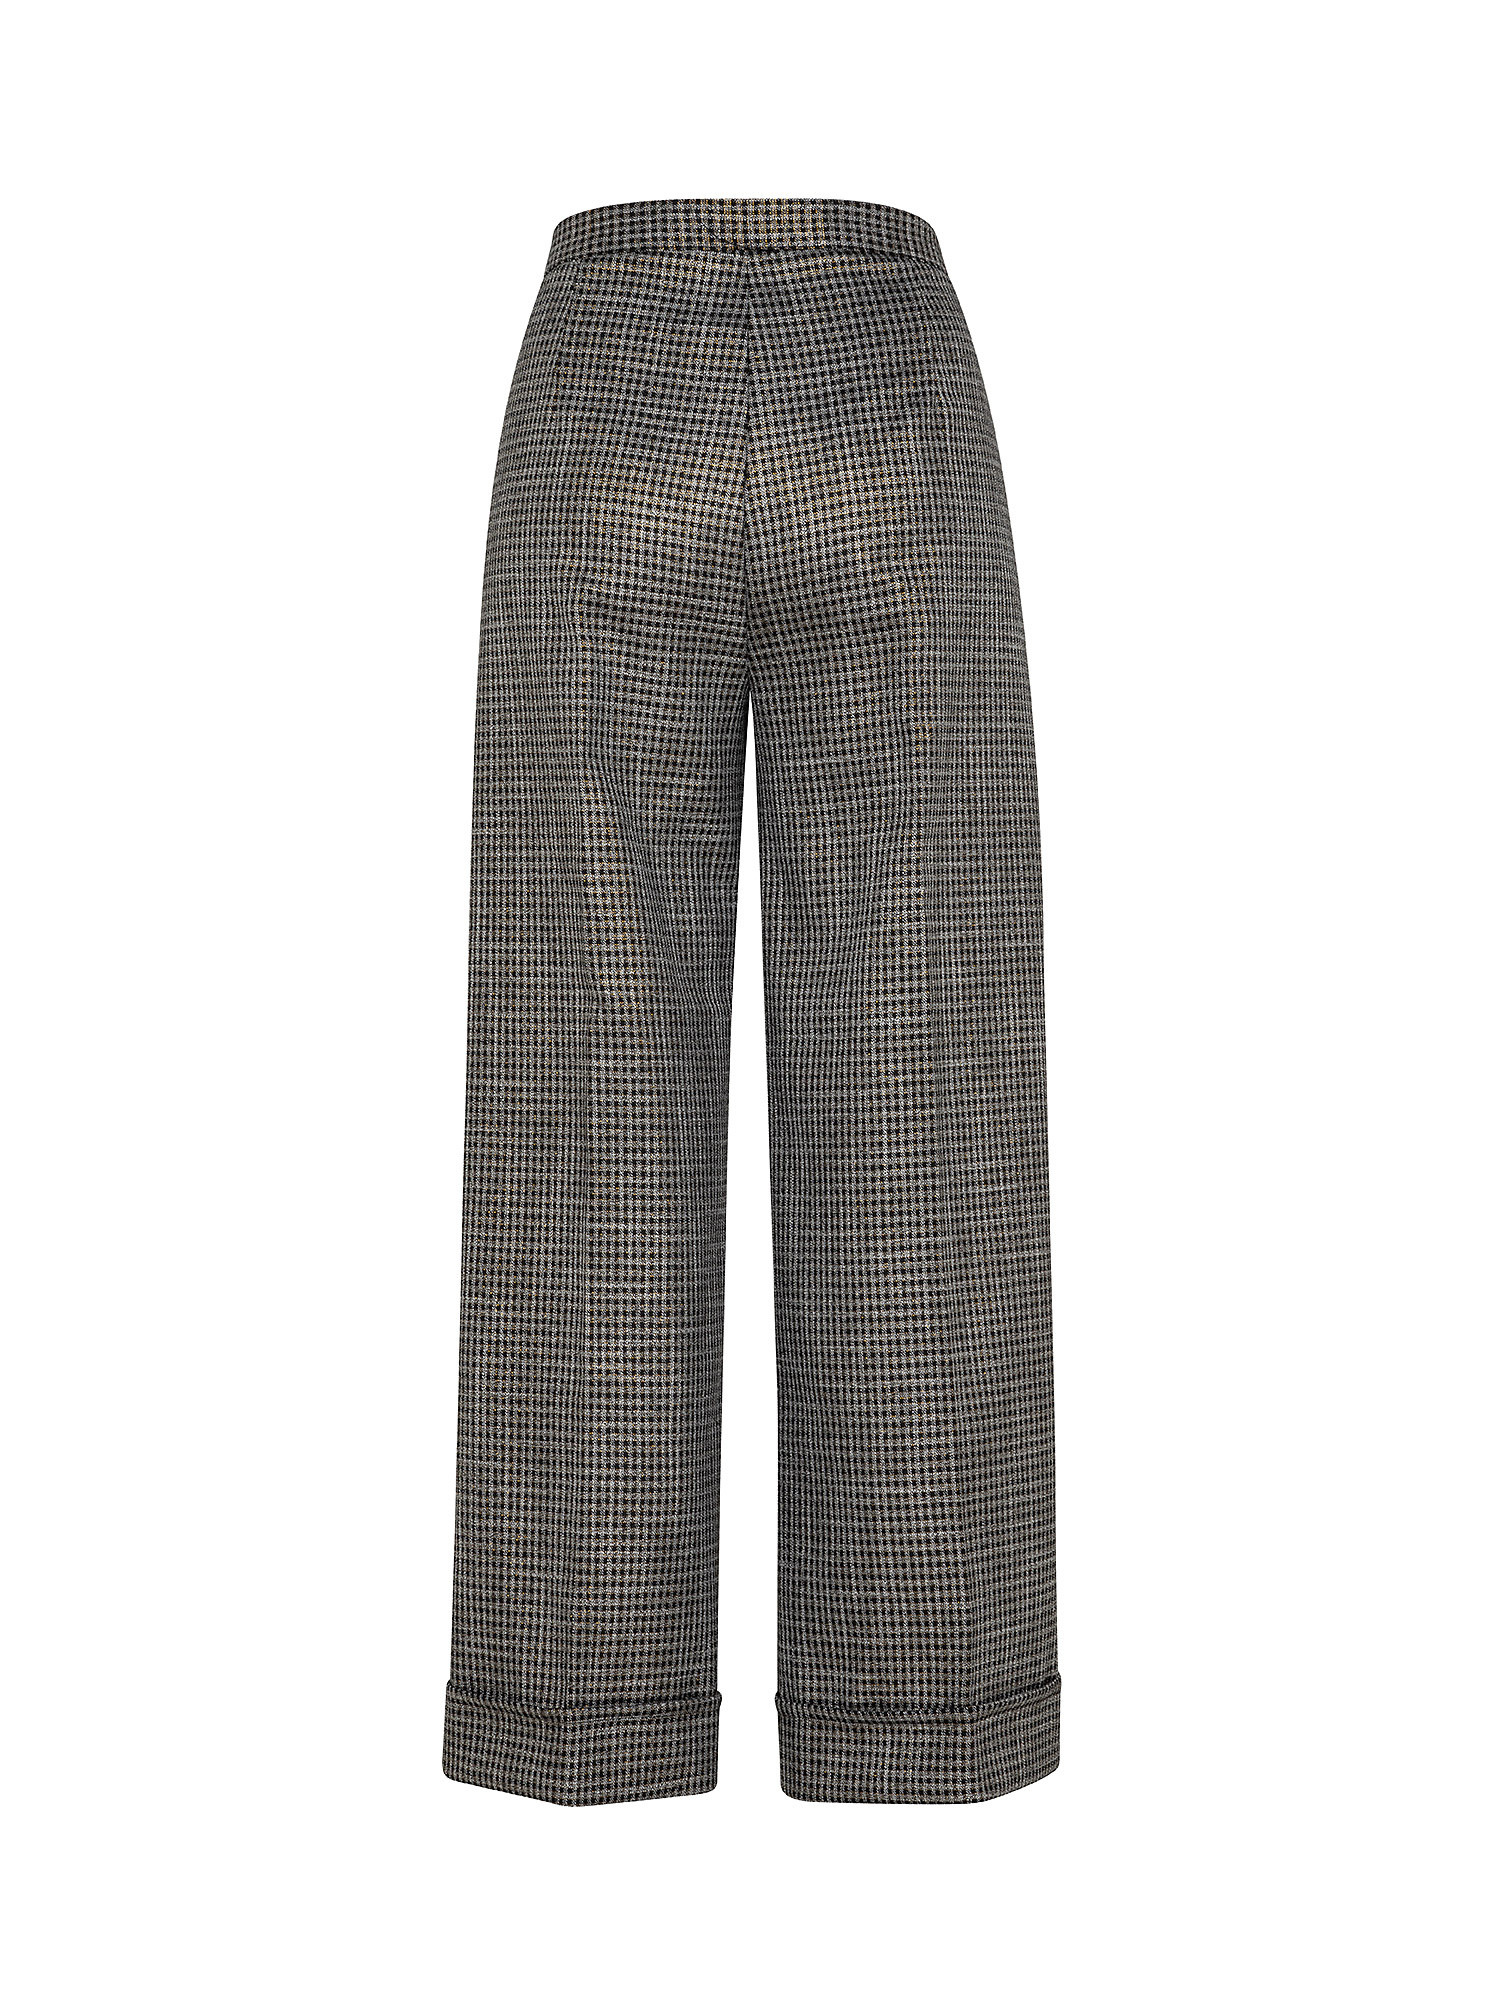 Pantaloni in lurex, Grigio, large image number 1